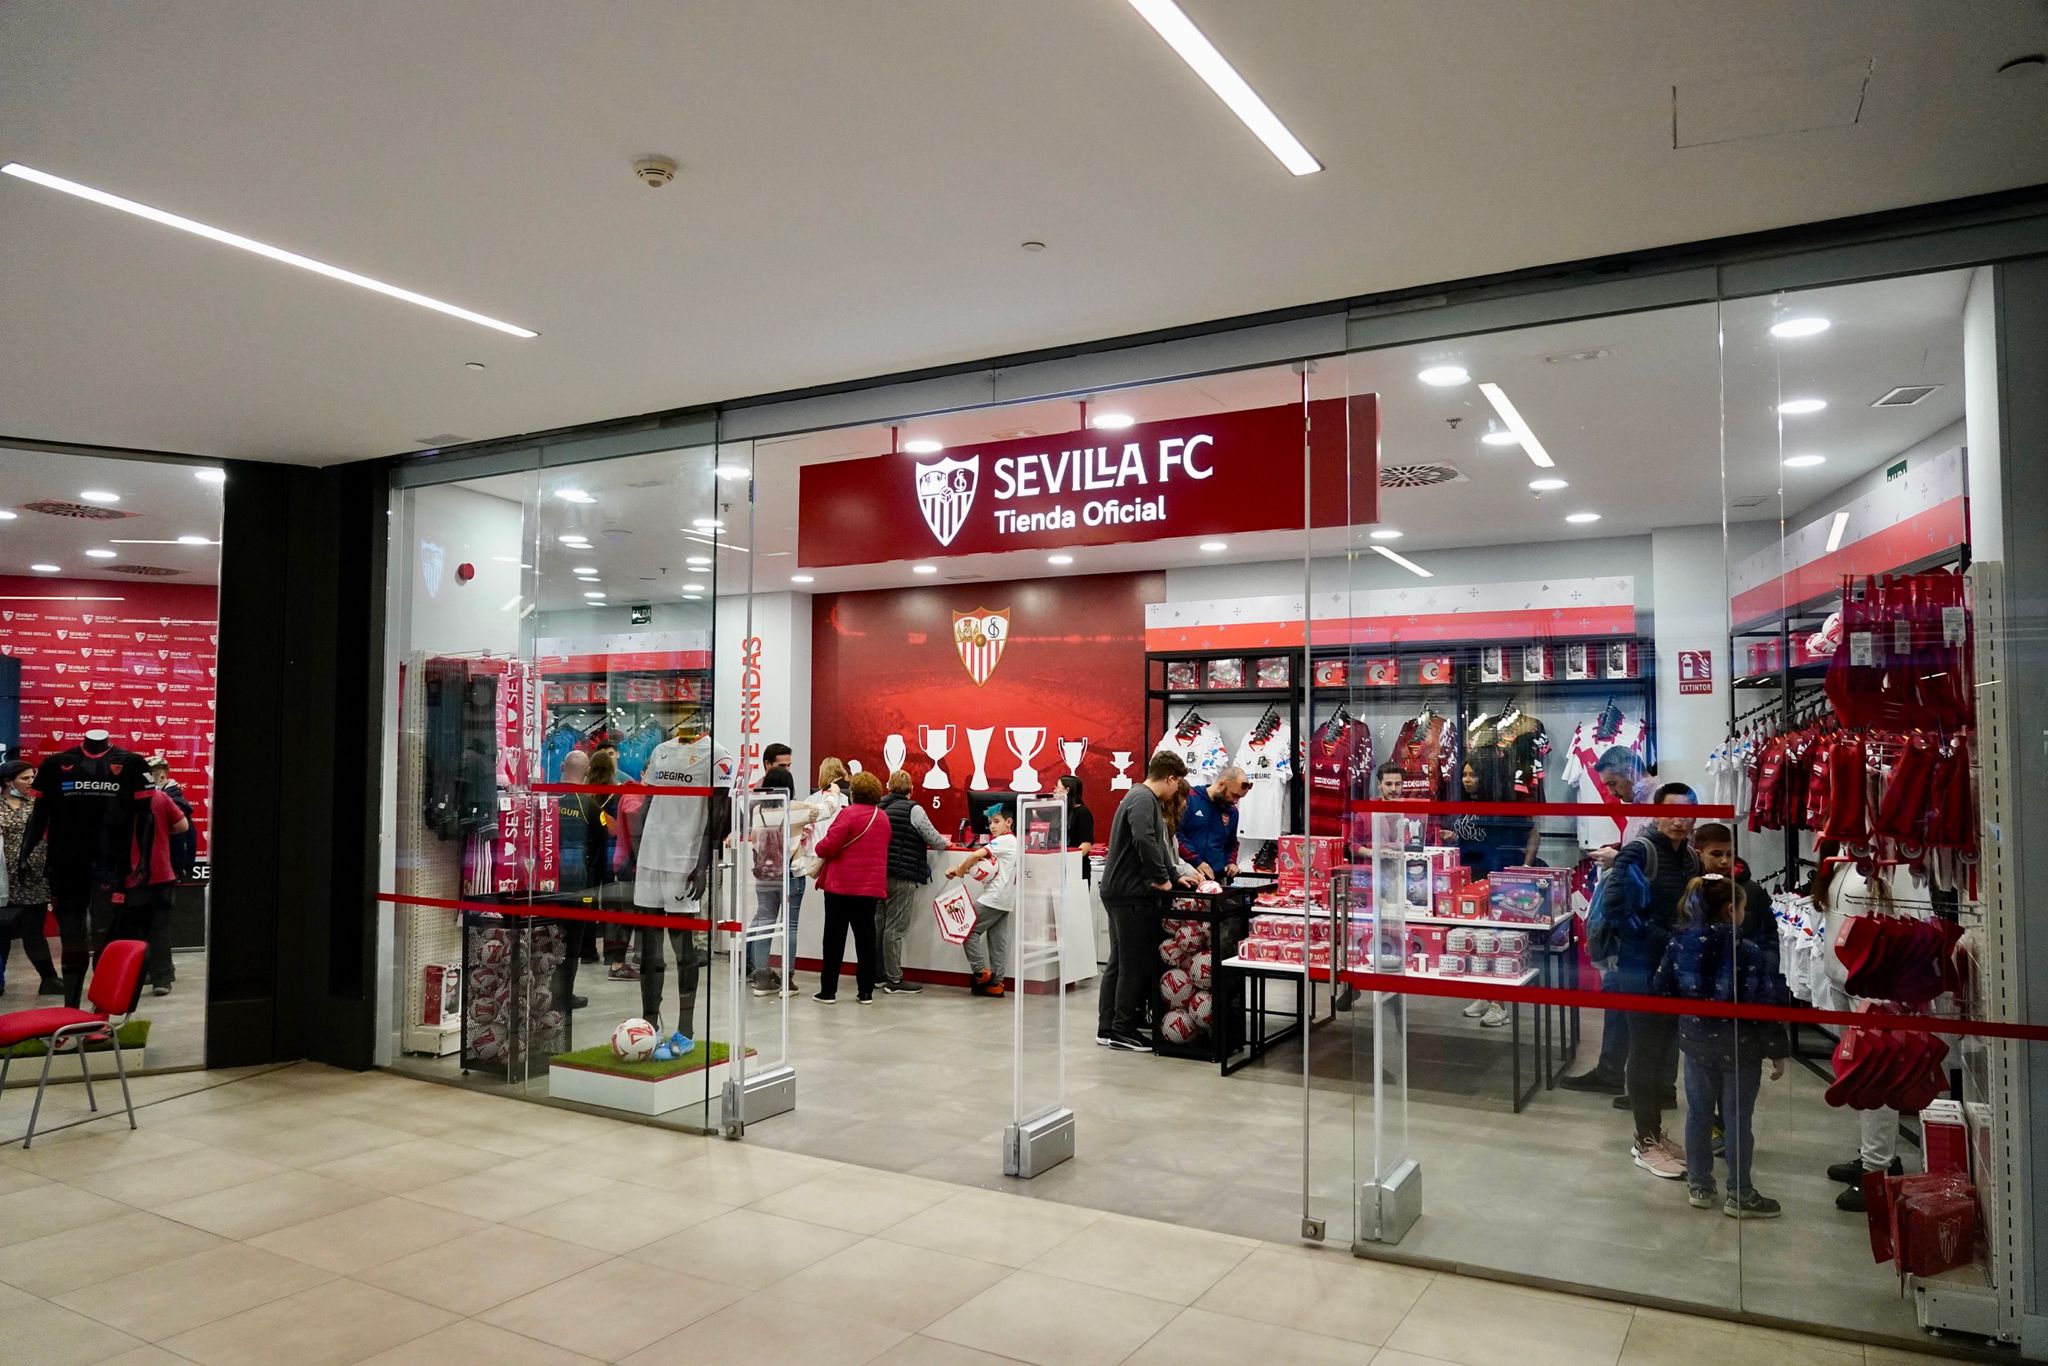 Imagen de la tienda oficial del Sevilla FC